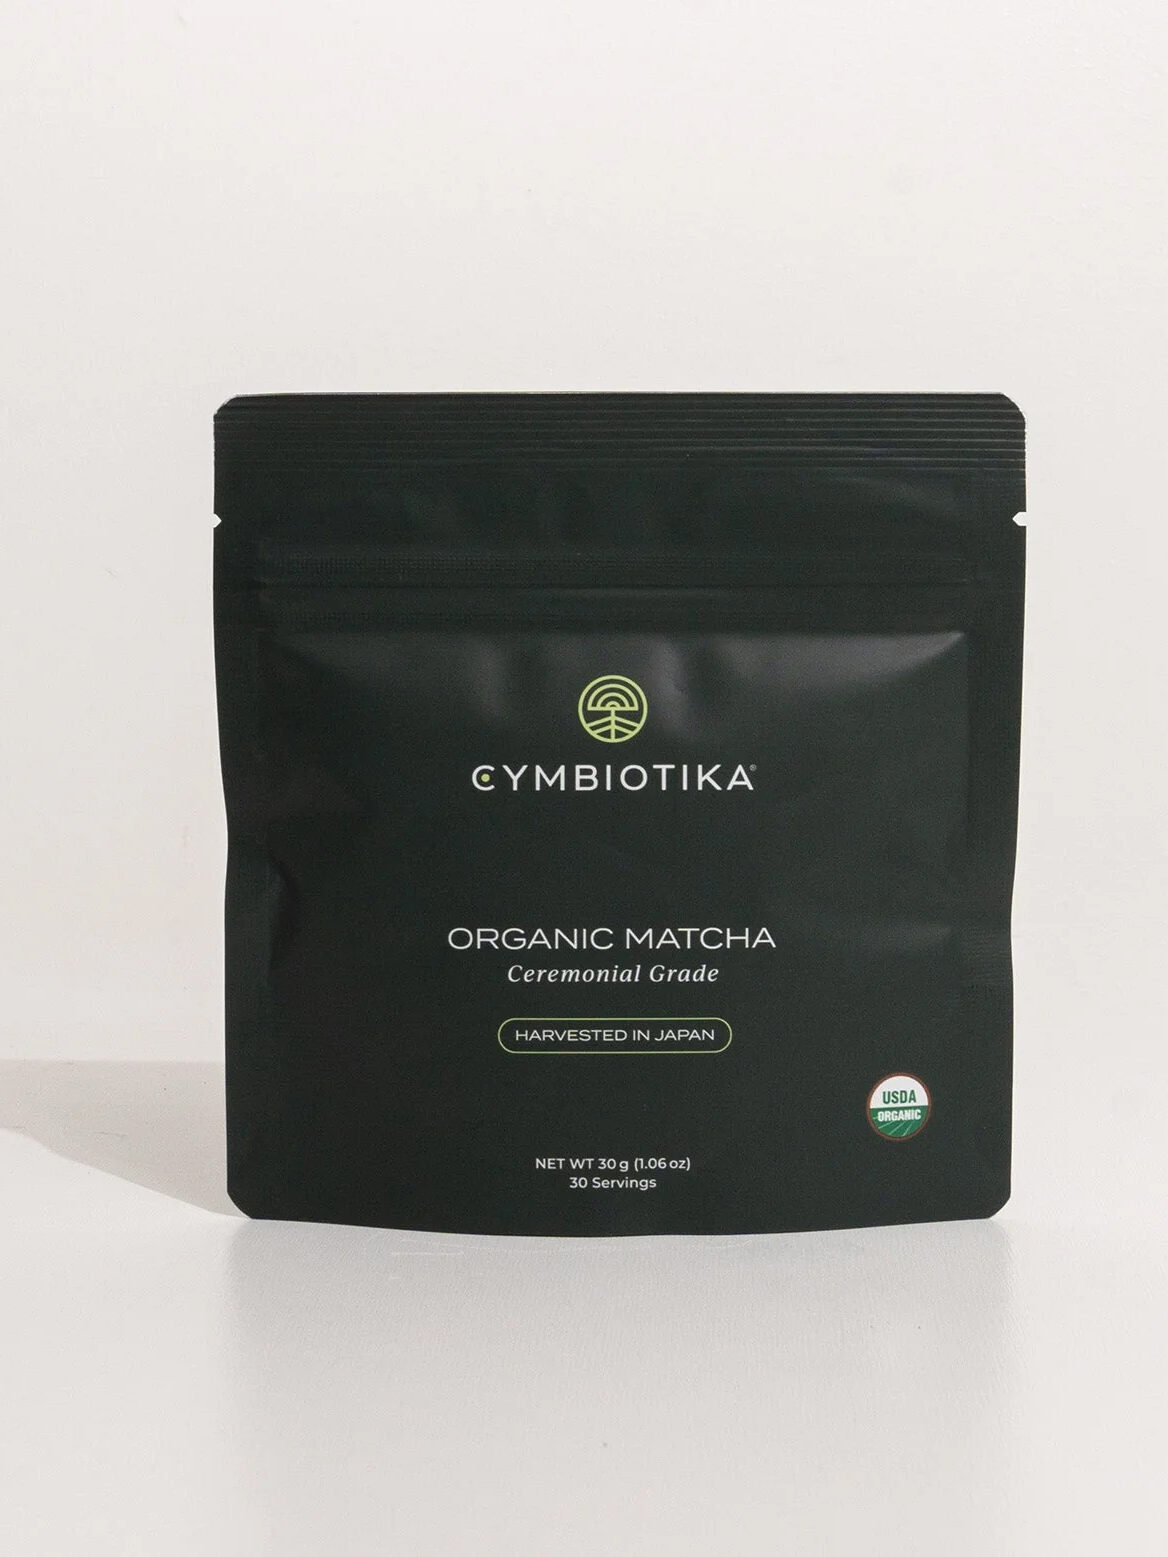 Matcha tea from Cymbiotika